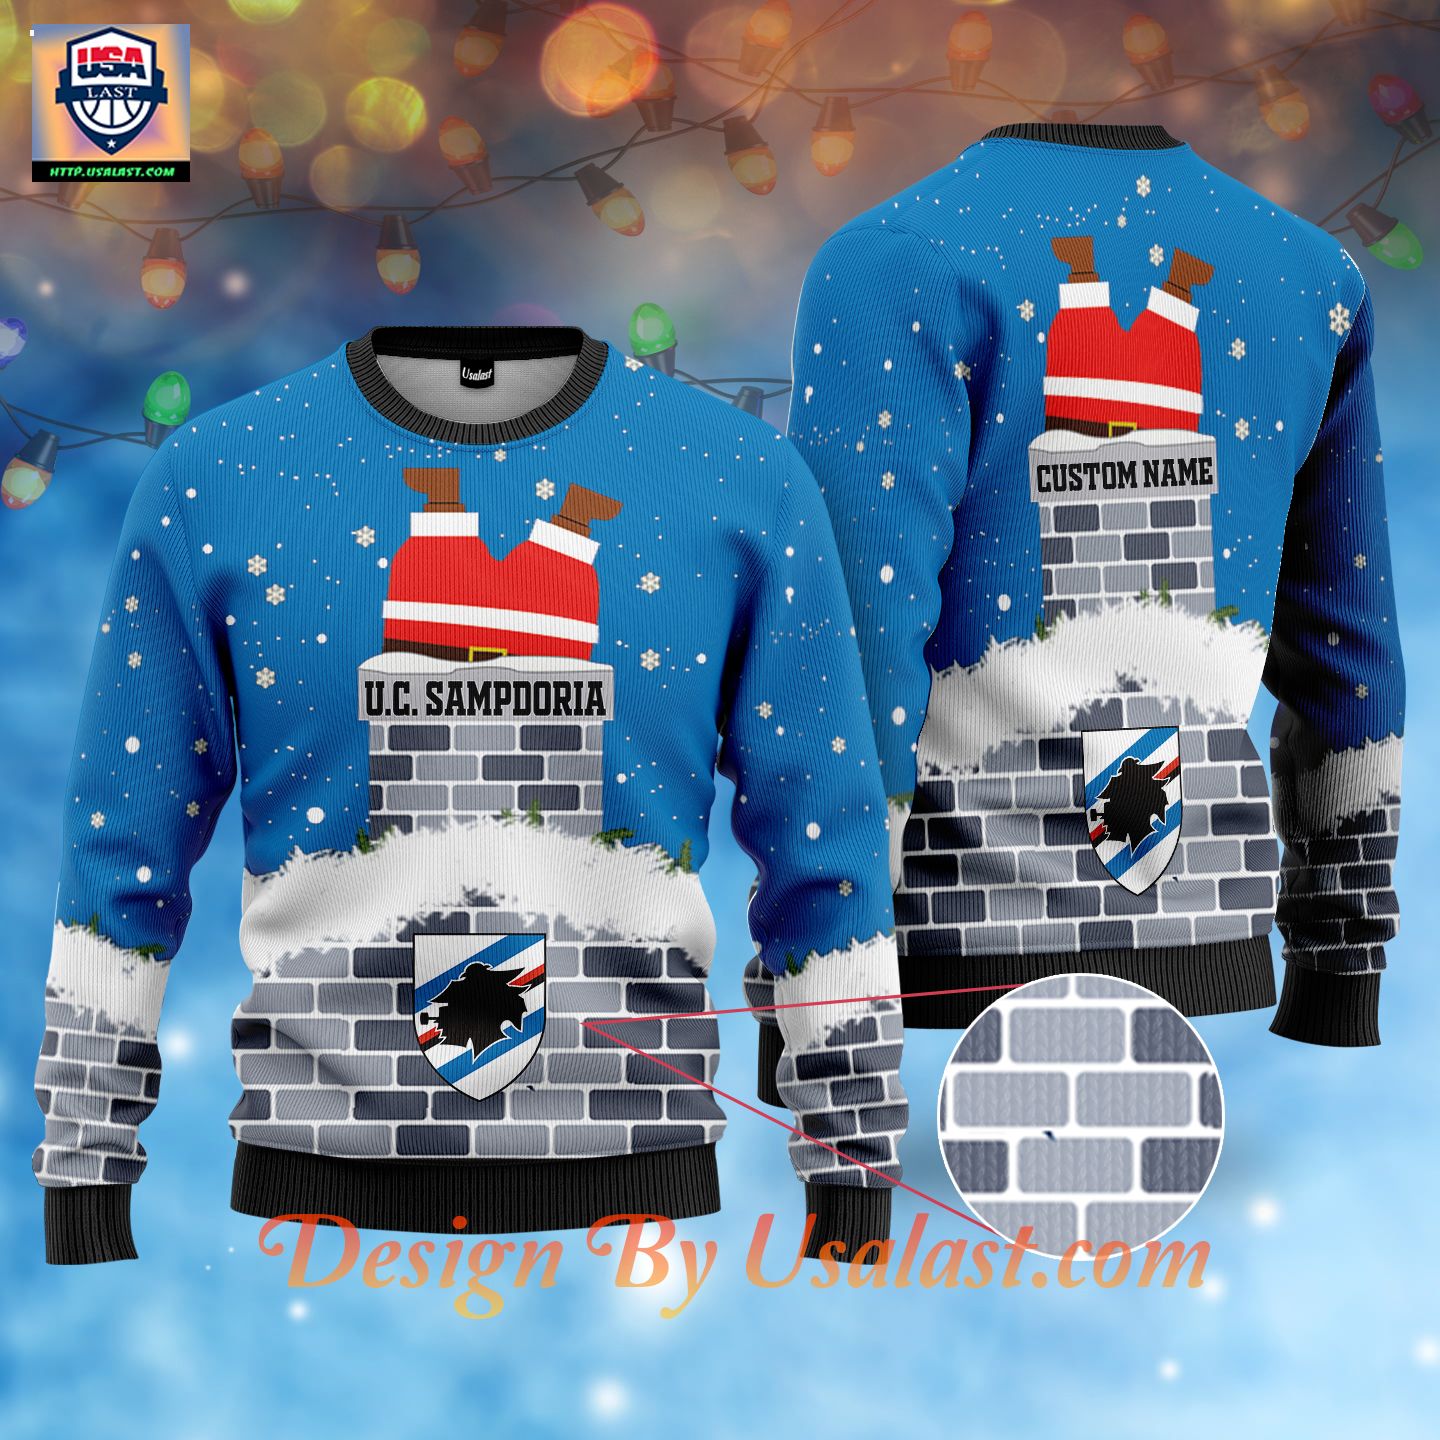 u-c-sampdoria-santa-claus-custom-name-ugly-christmas-sweater-1-ddNKK.jpg